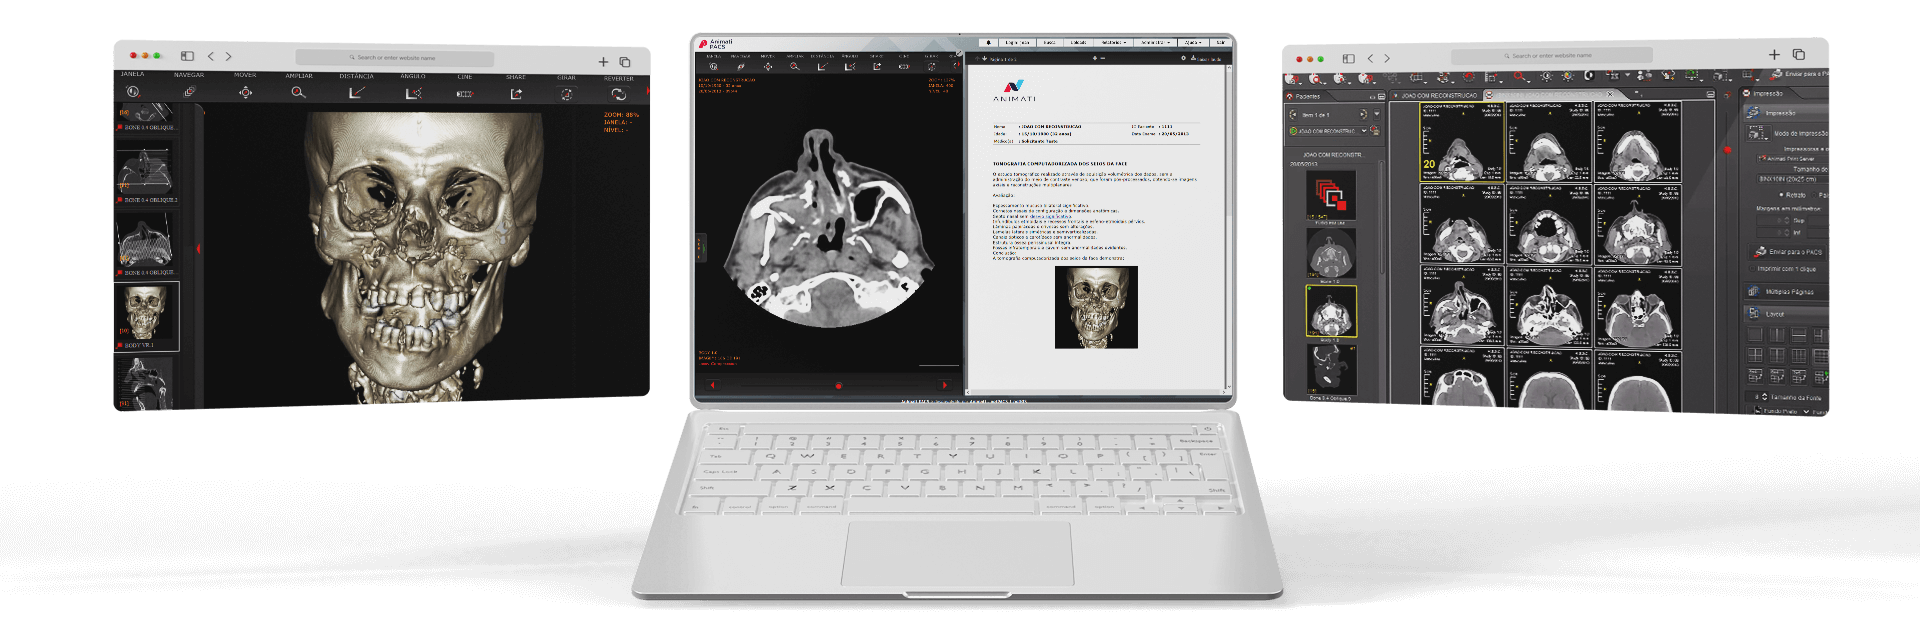 Software de Radiologia Animati netPACS